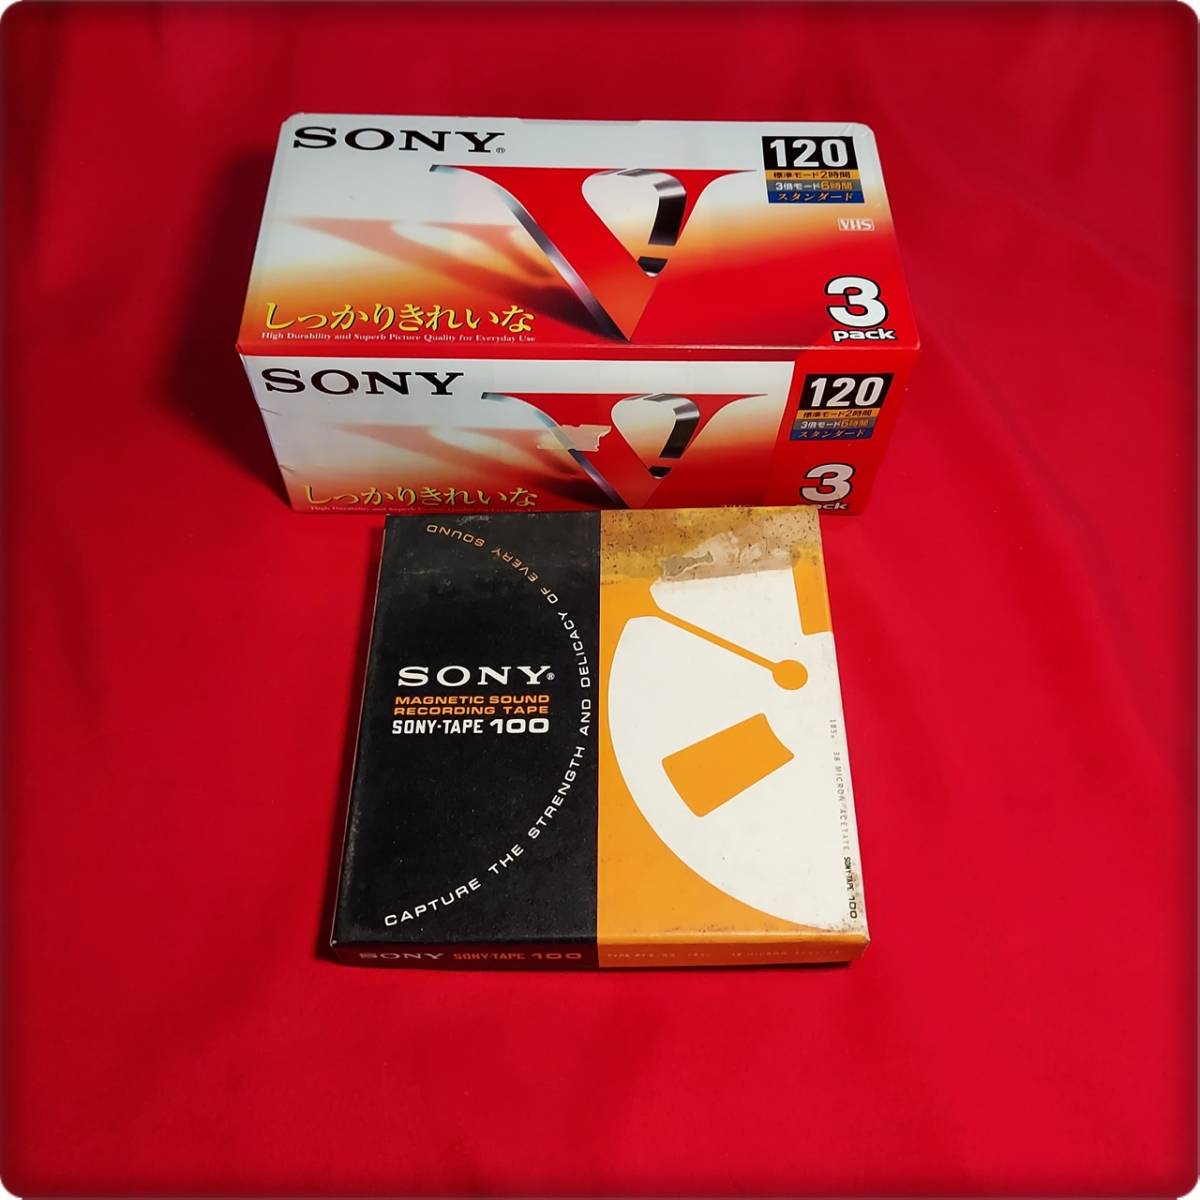 (po) не использовался SONY видео кассетная лента VHS 120 минут 3 упаковка /SONY-TAPE 100 Sony лента открытый катушка катушка лента 2 шт. комплект текущее состояние товар 